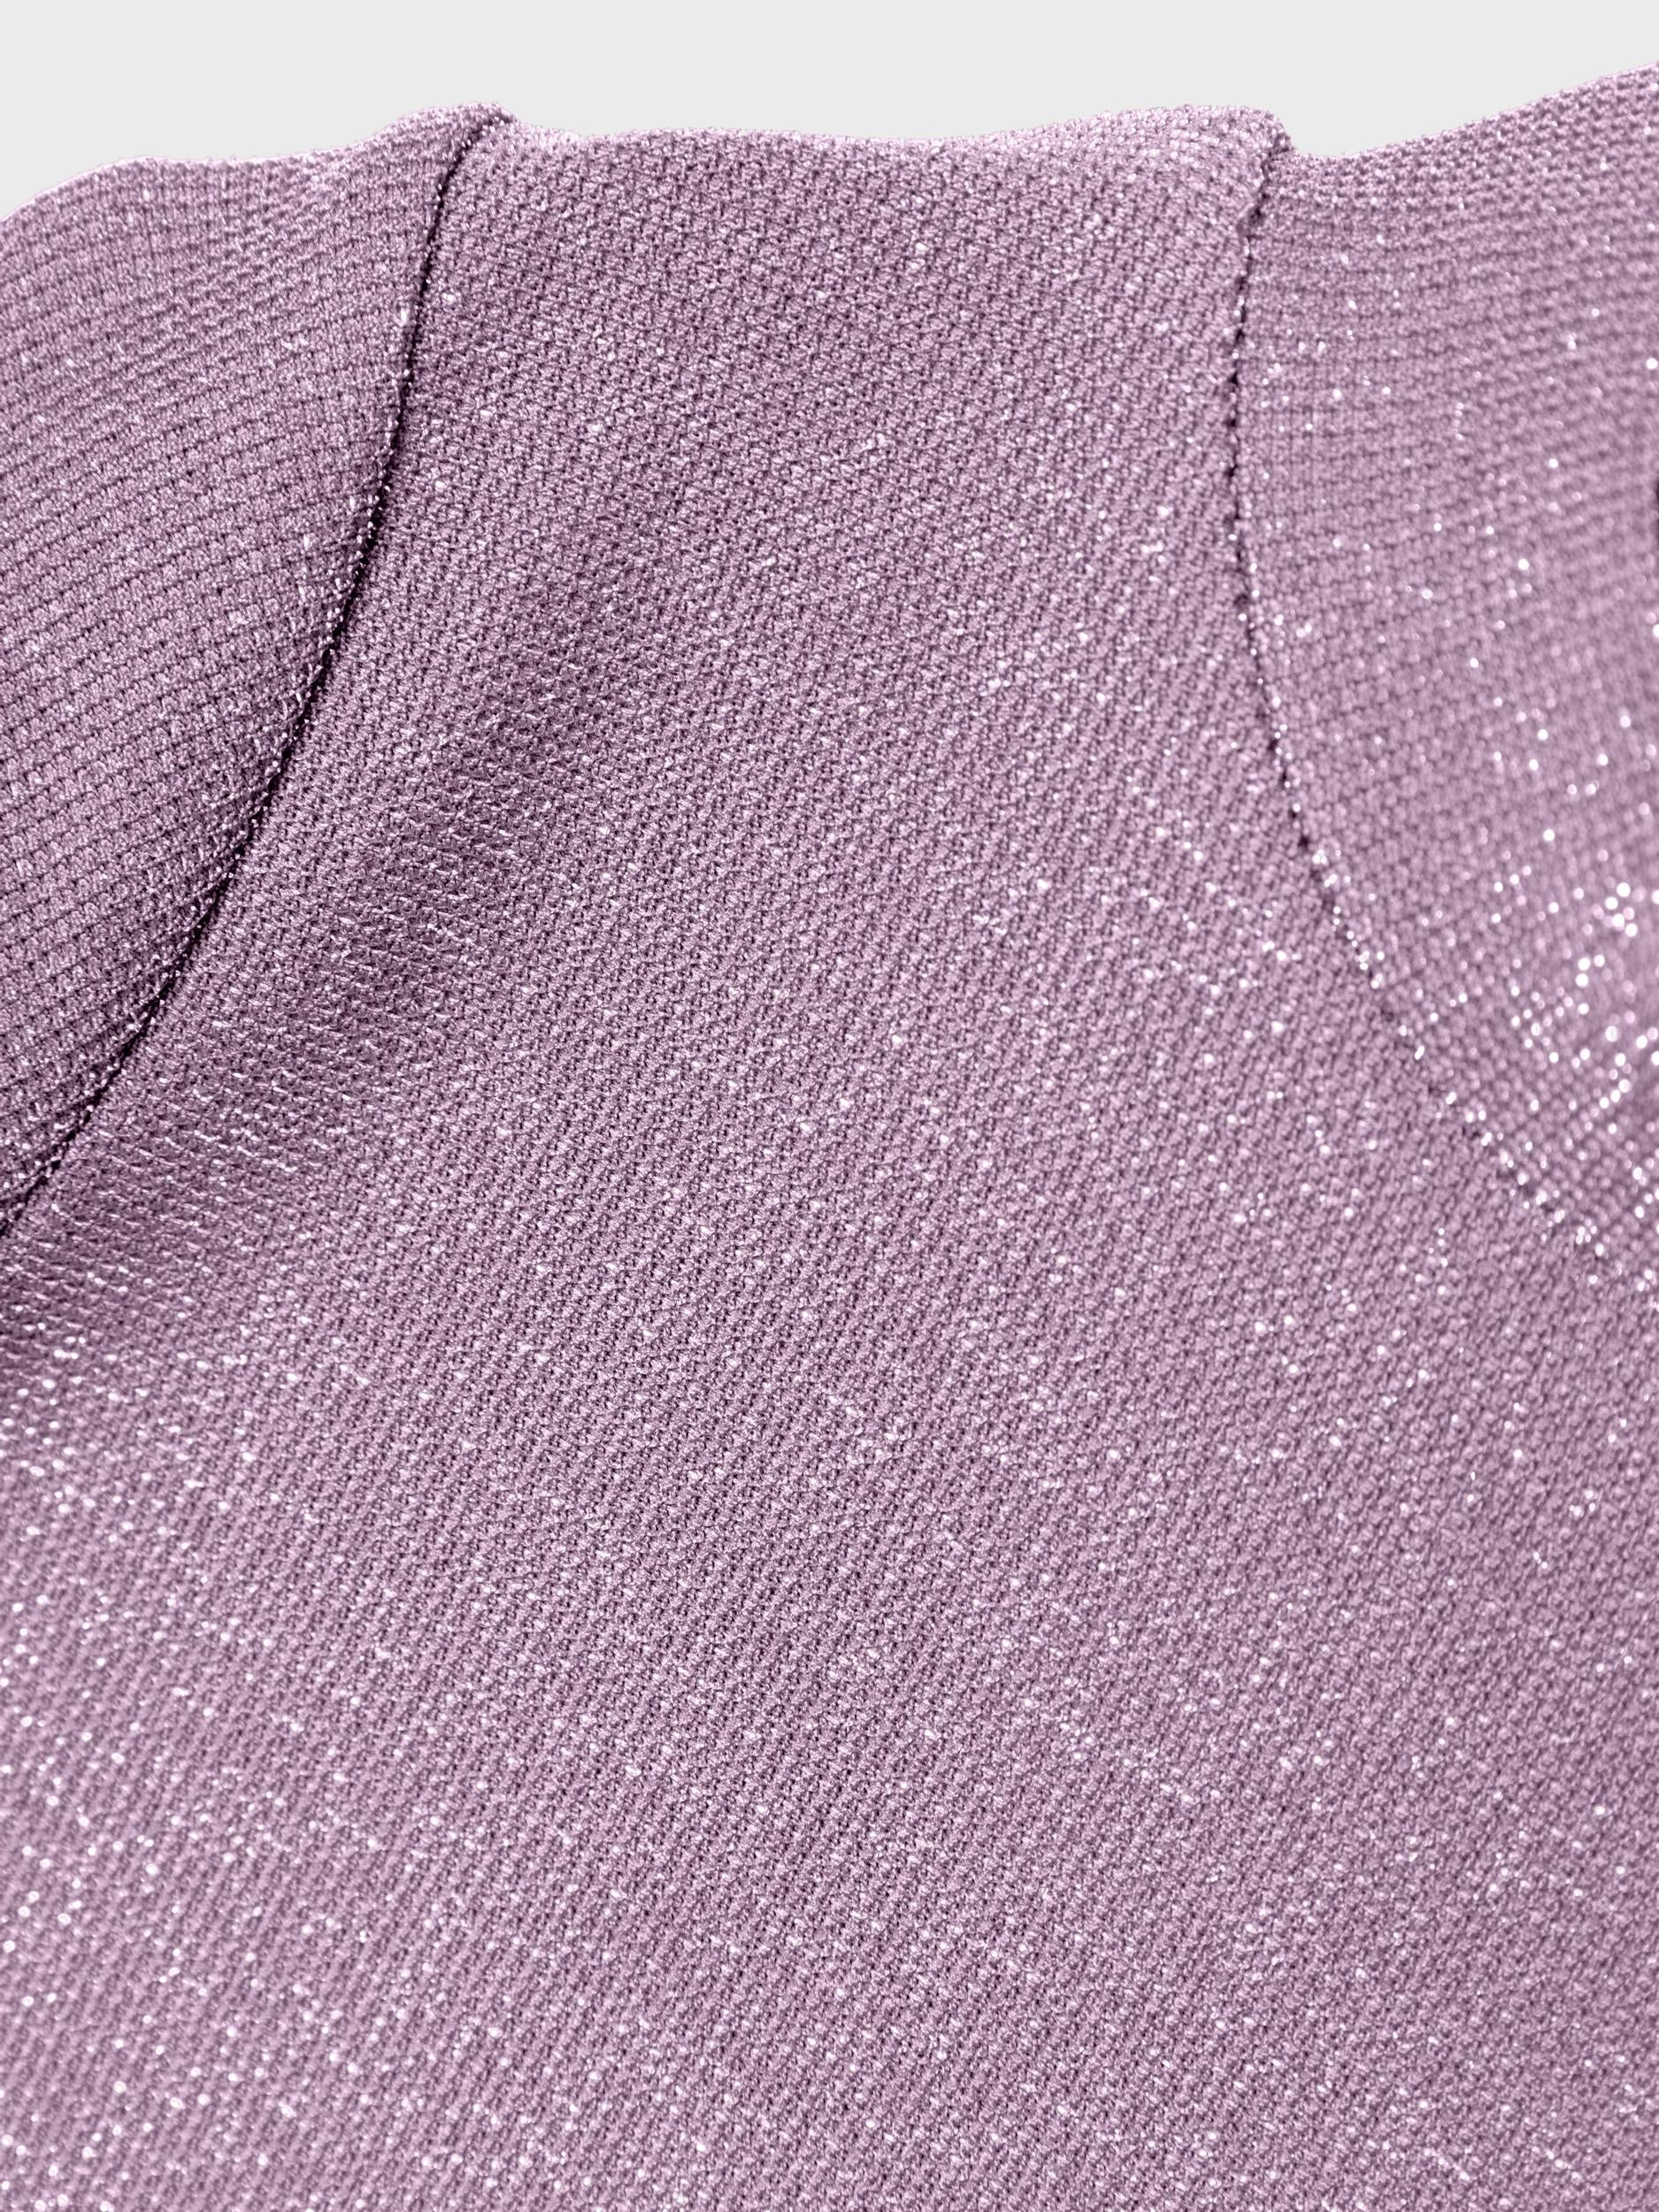 Ragne Long Sleeve Lavender Mist Top-Close up view